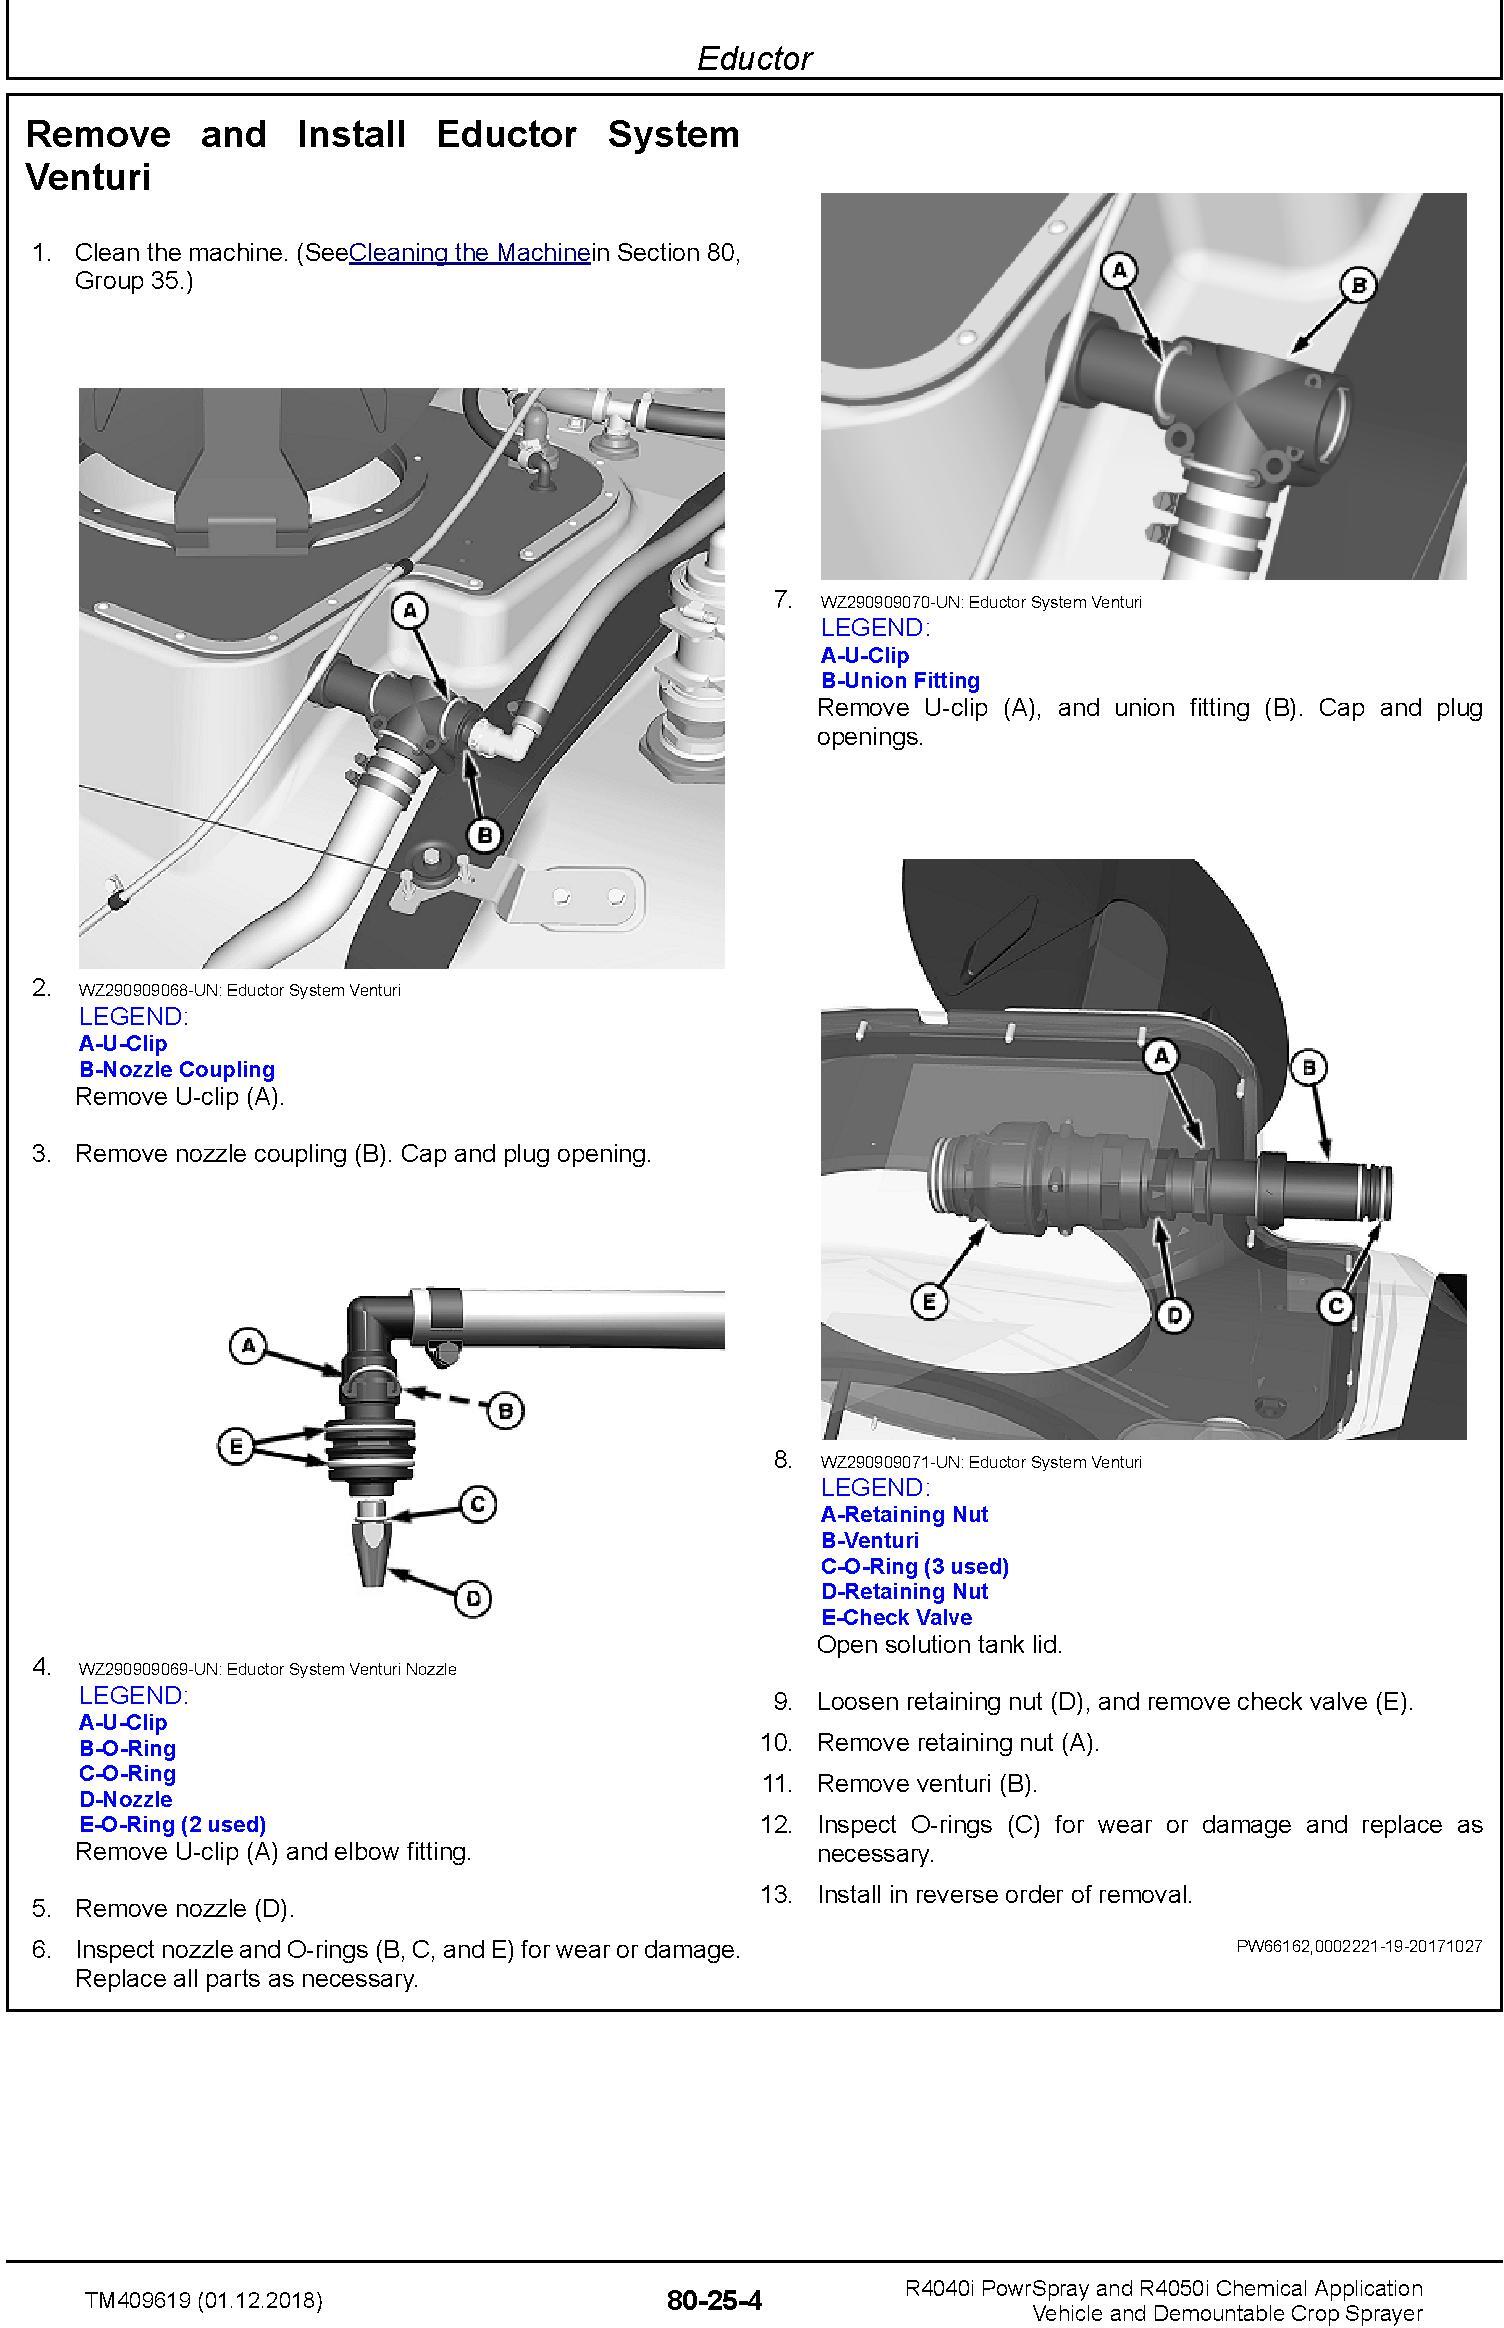 John Deere R4040i, R4050i Demountable Crop Sprayer (MY18) Repair Technical Service Manual (TM409619) - 3